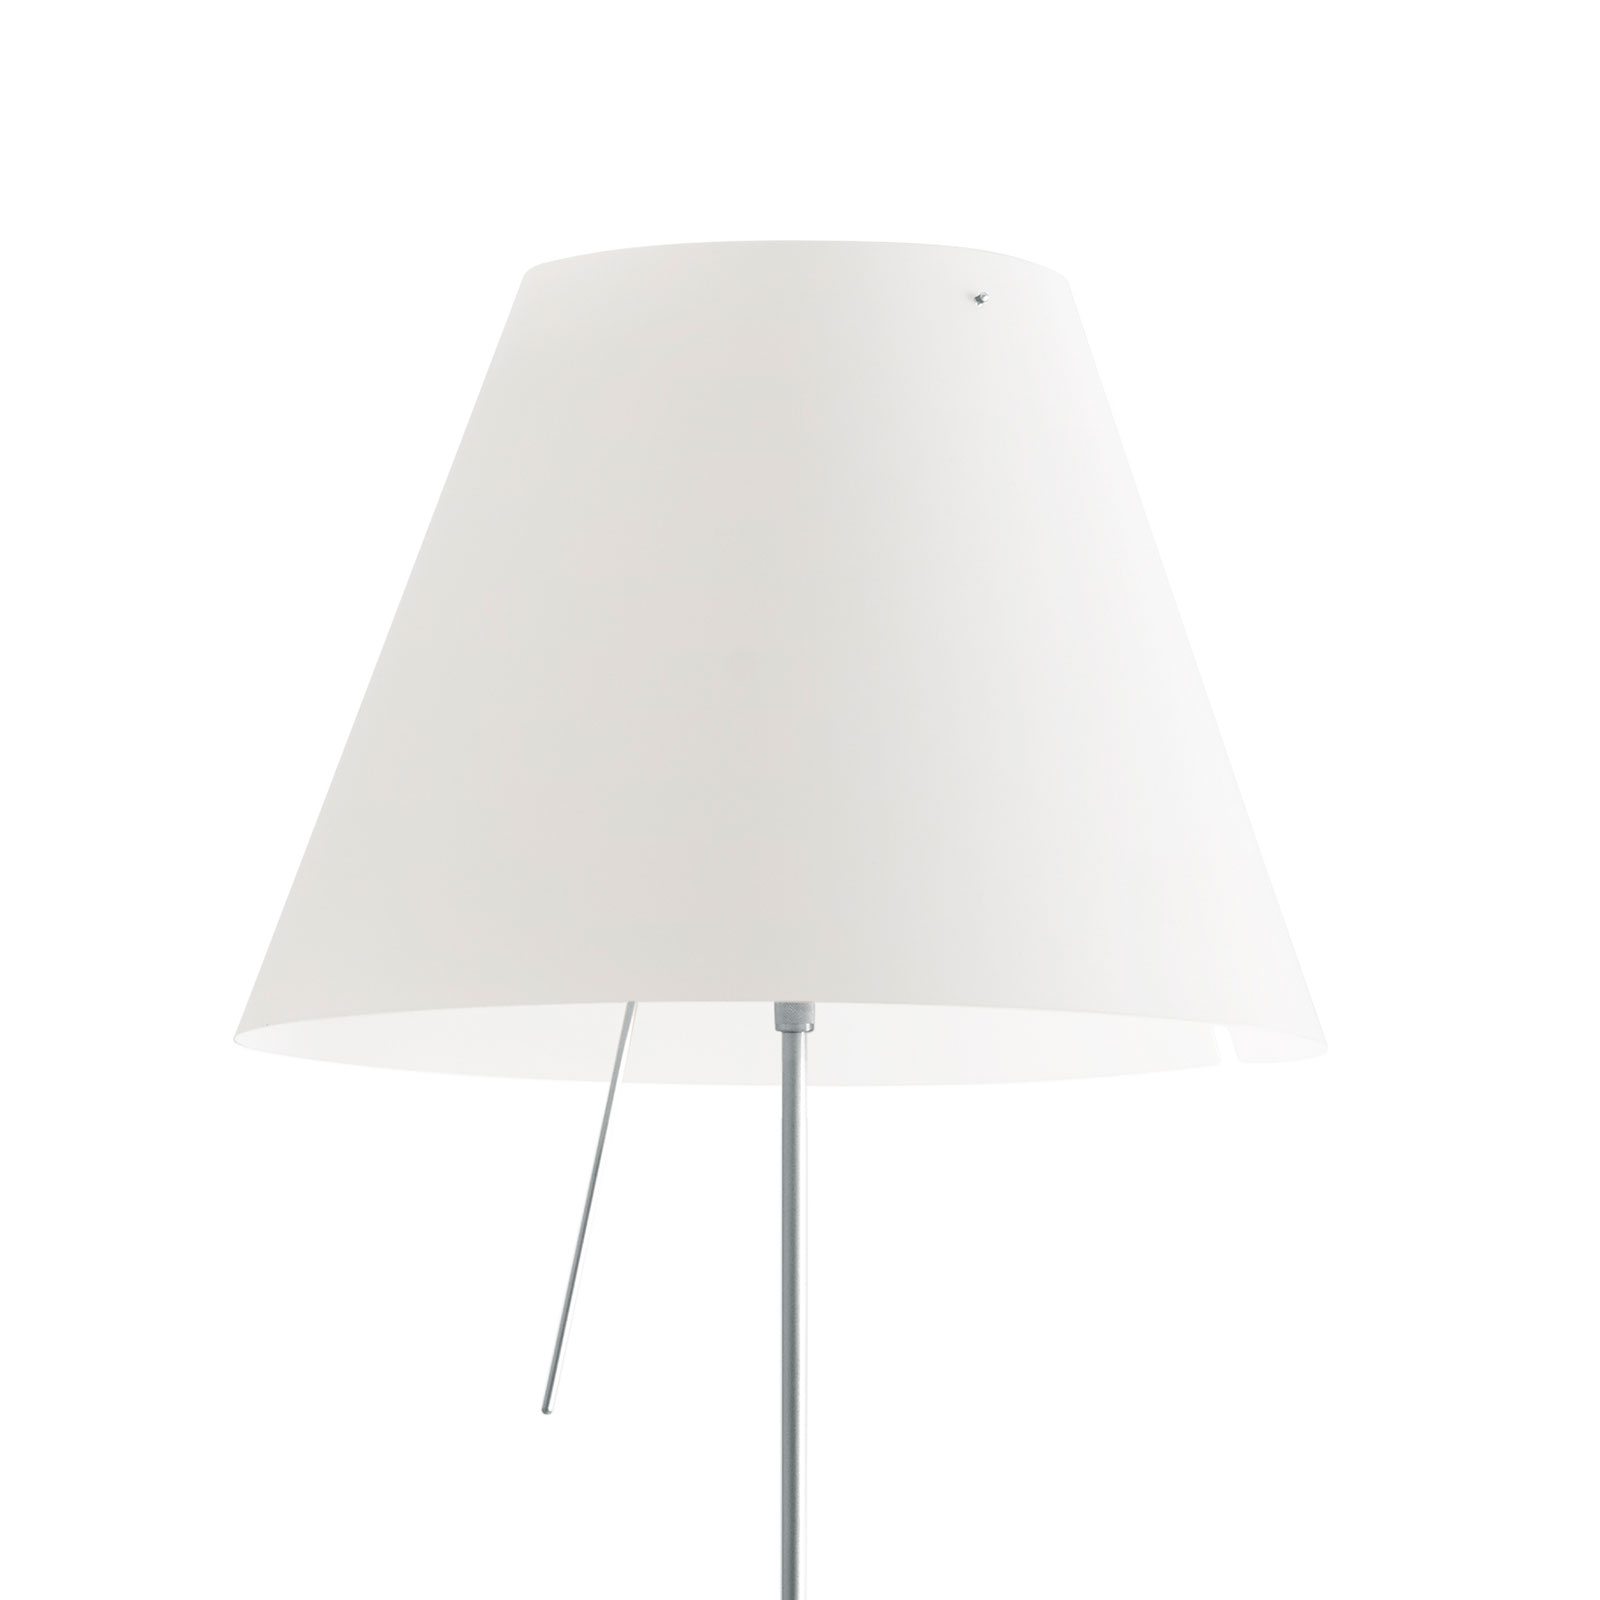 Luceplan Costanza vloerlamp D13t, alu/wit